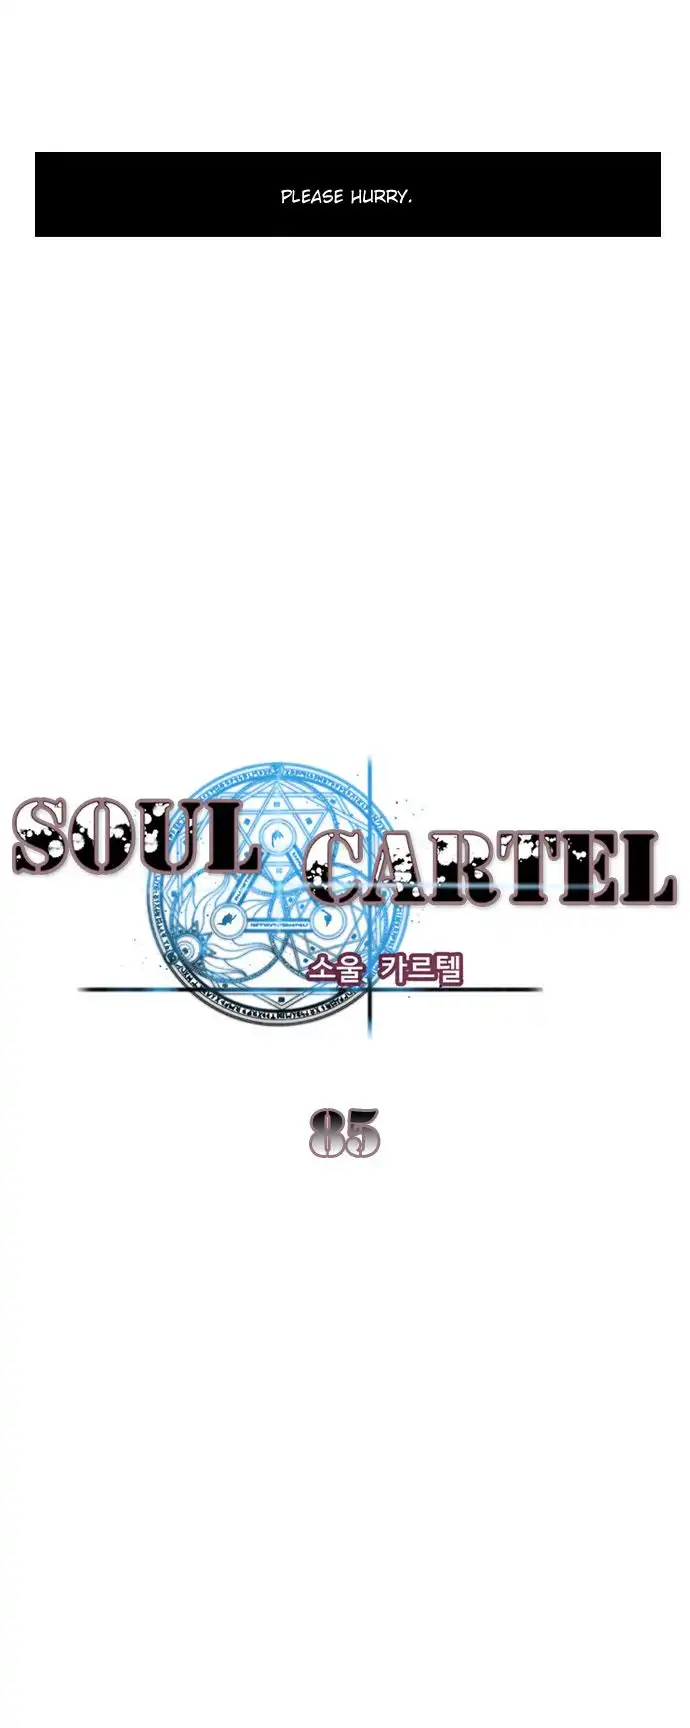 Soul Cartel Chapter 85